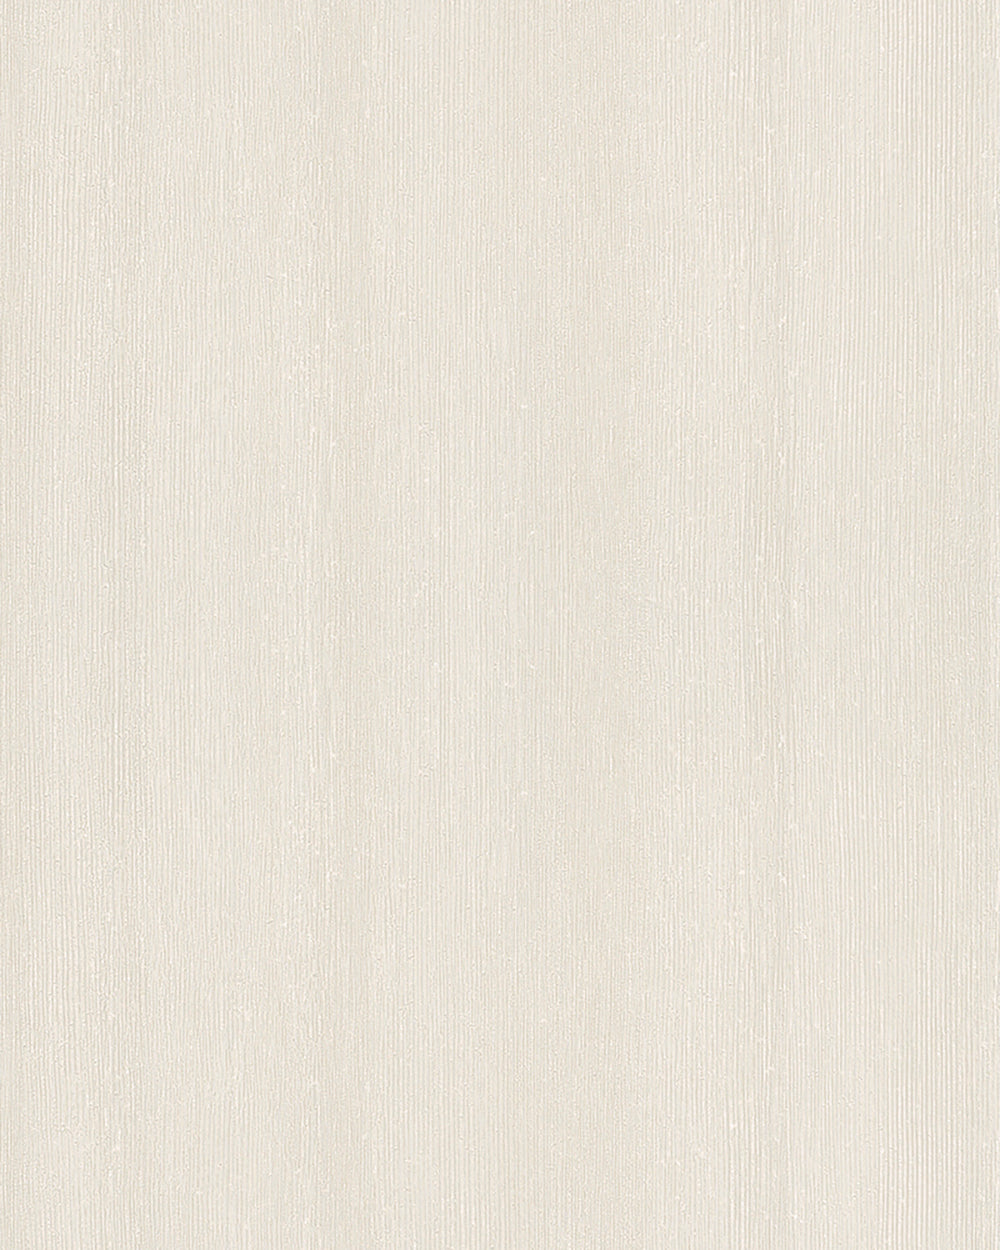 Avalon - Wood Grain plain wallpaper Marburg Roll Beige  31635